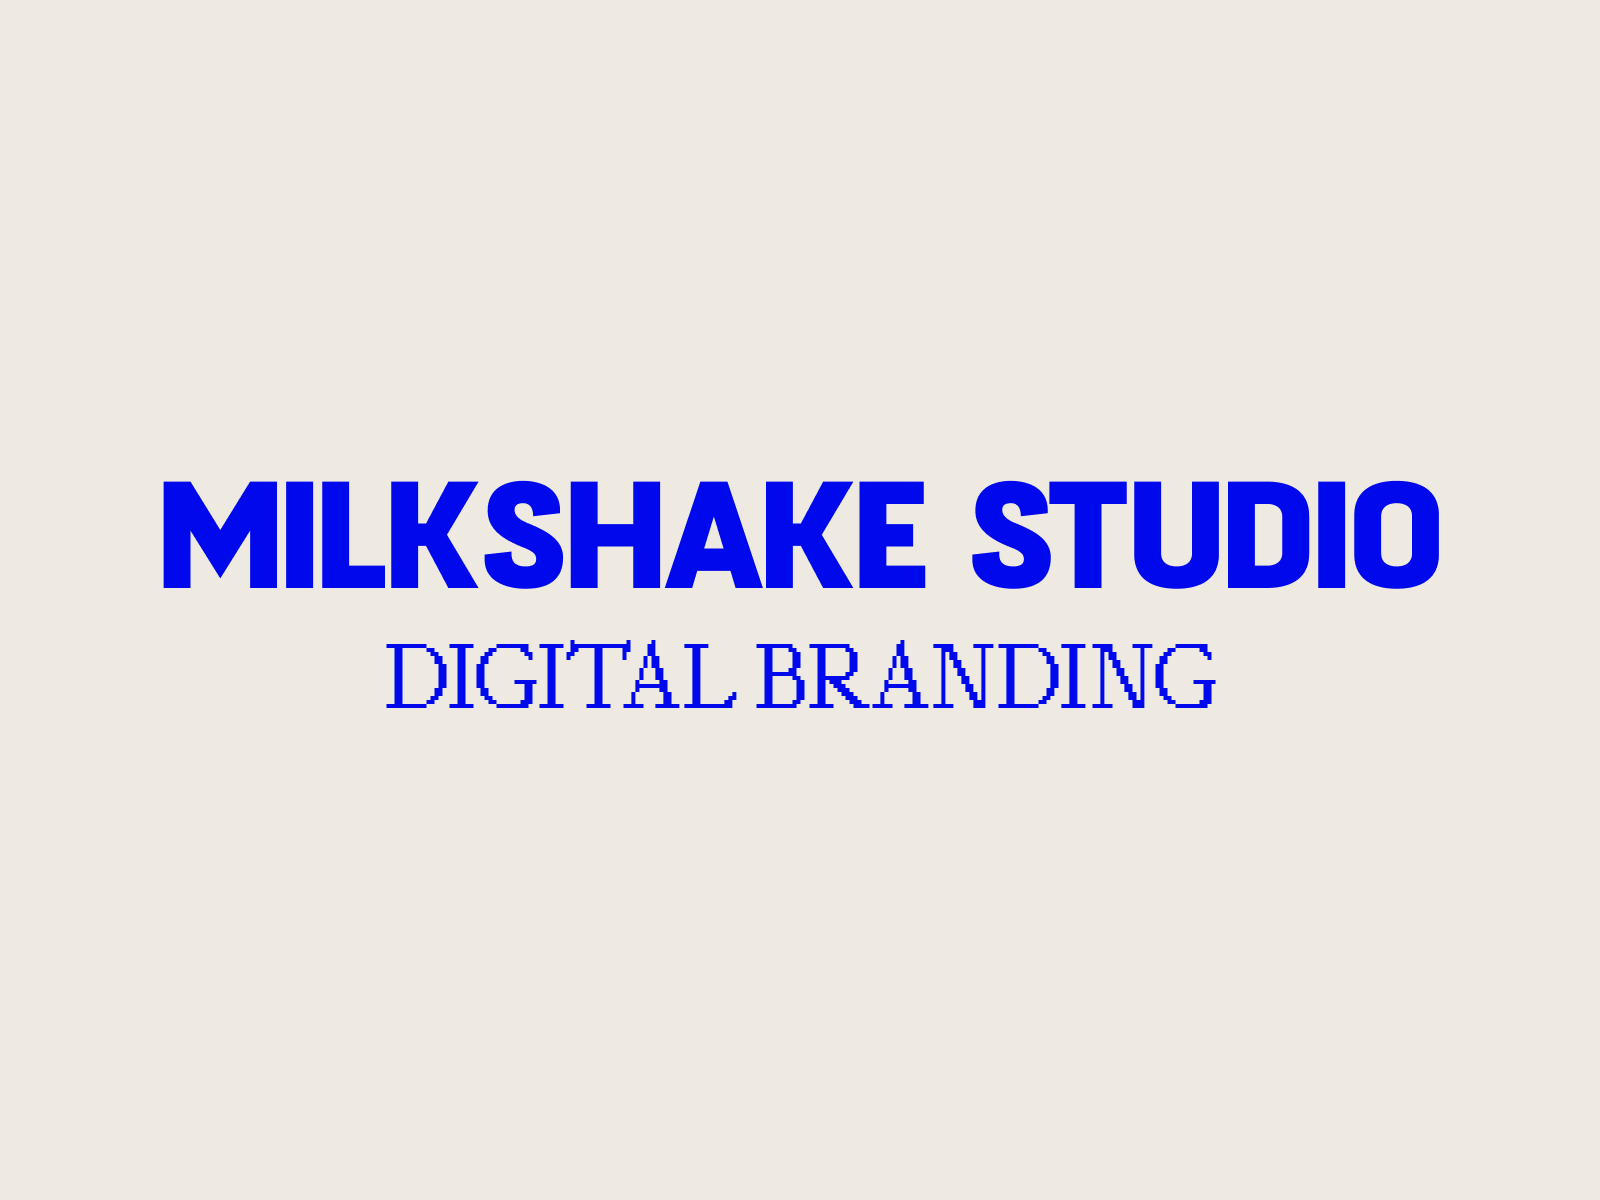 Milkshake Studio